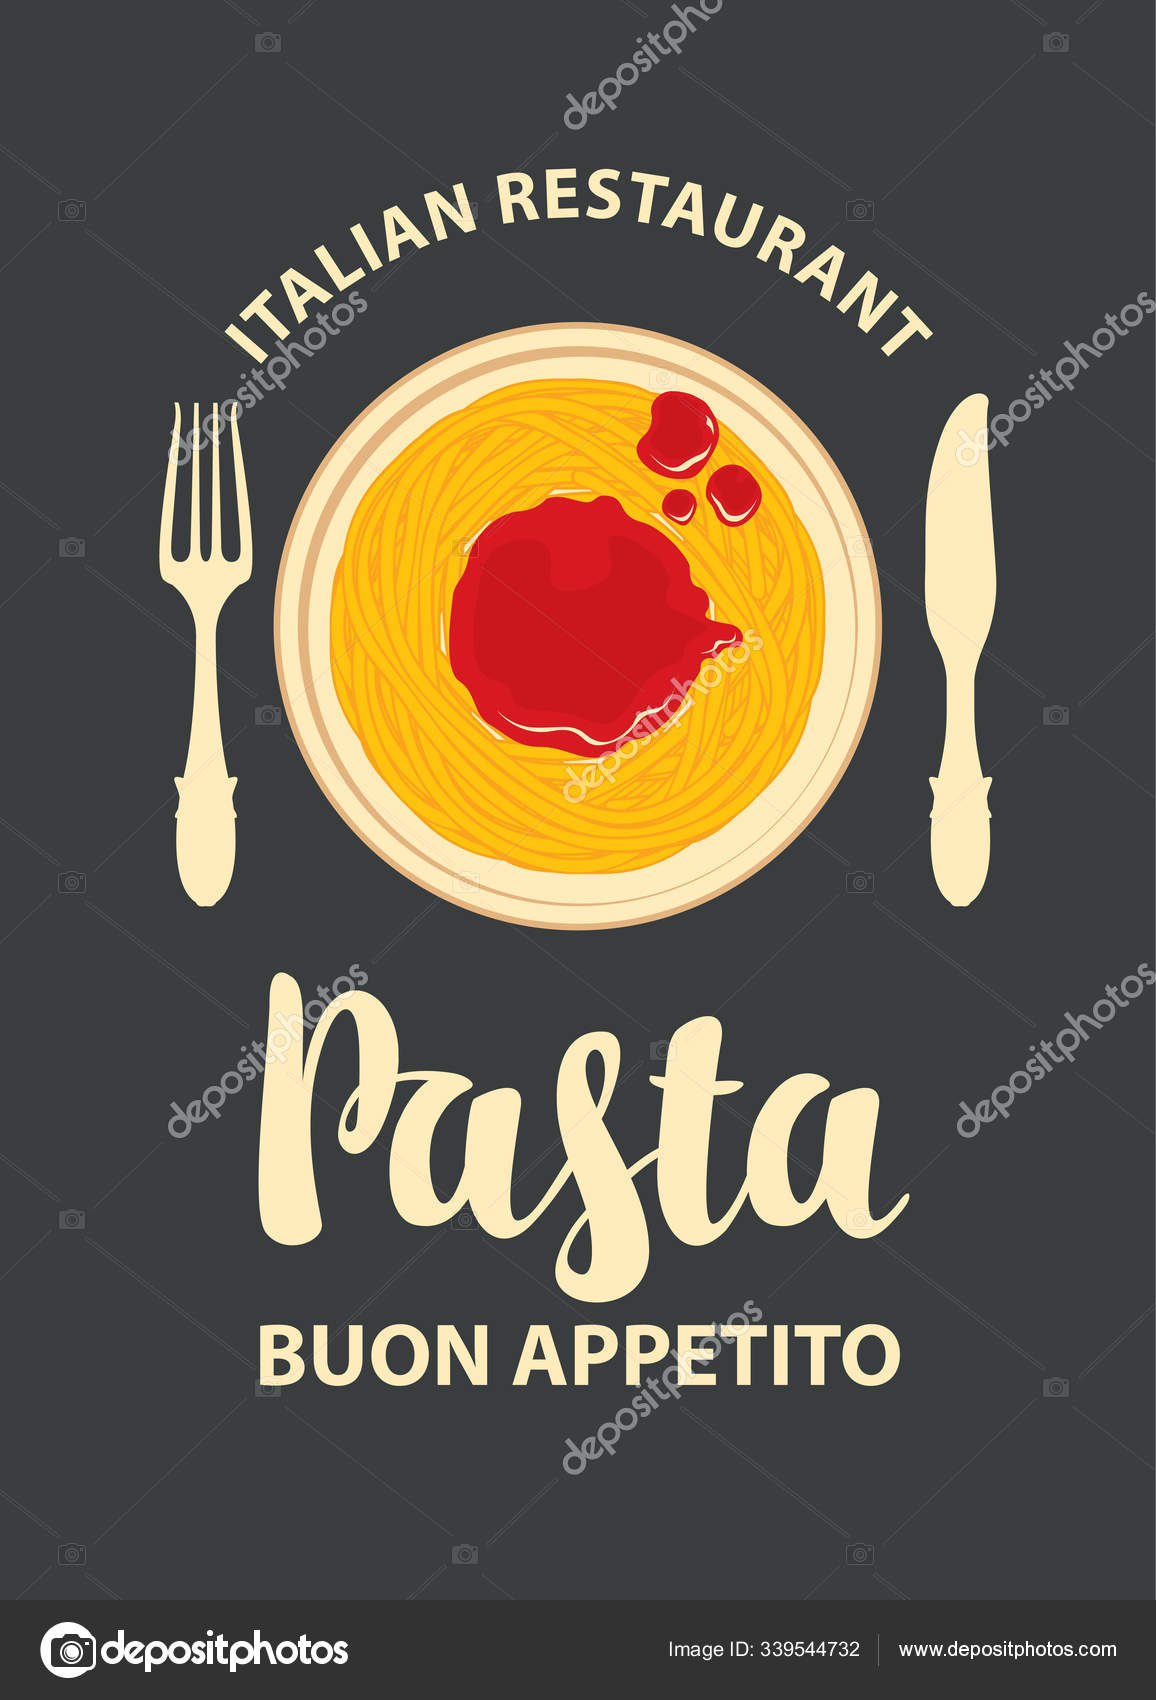 Pasta Design Poster Retro Style Vector Vintage Flyer Italian Food